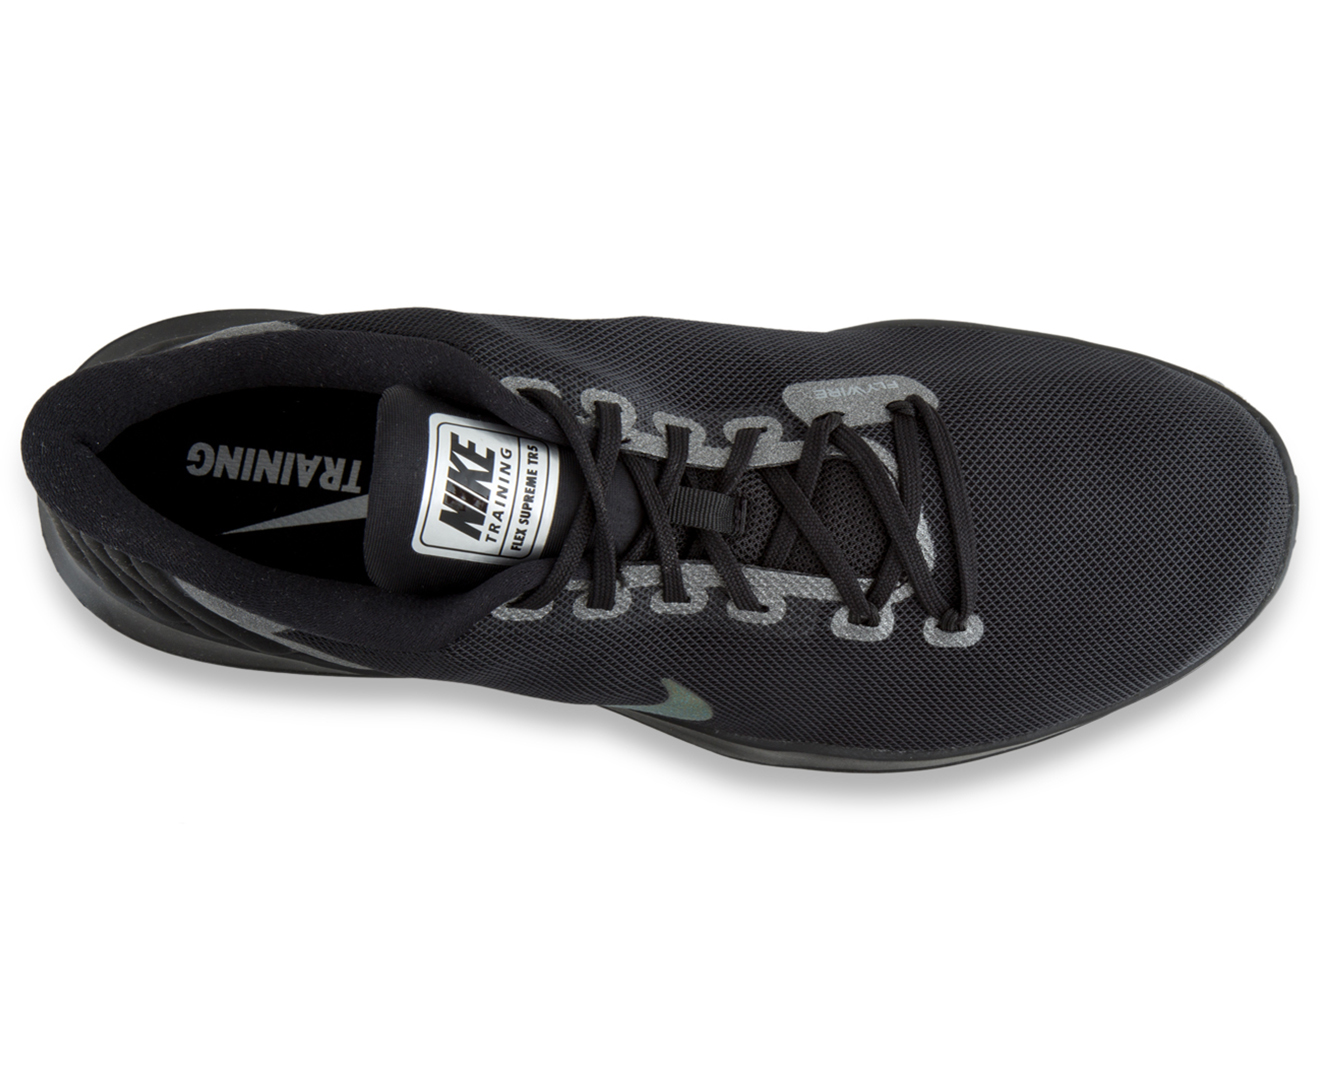 Nike Women's Flex Supreme 5 MTLC Shoe - Black/Dark Grey | Catch.com.au